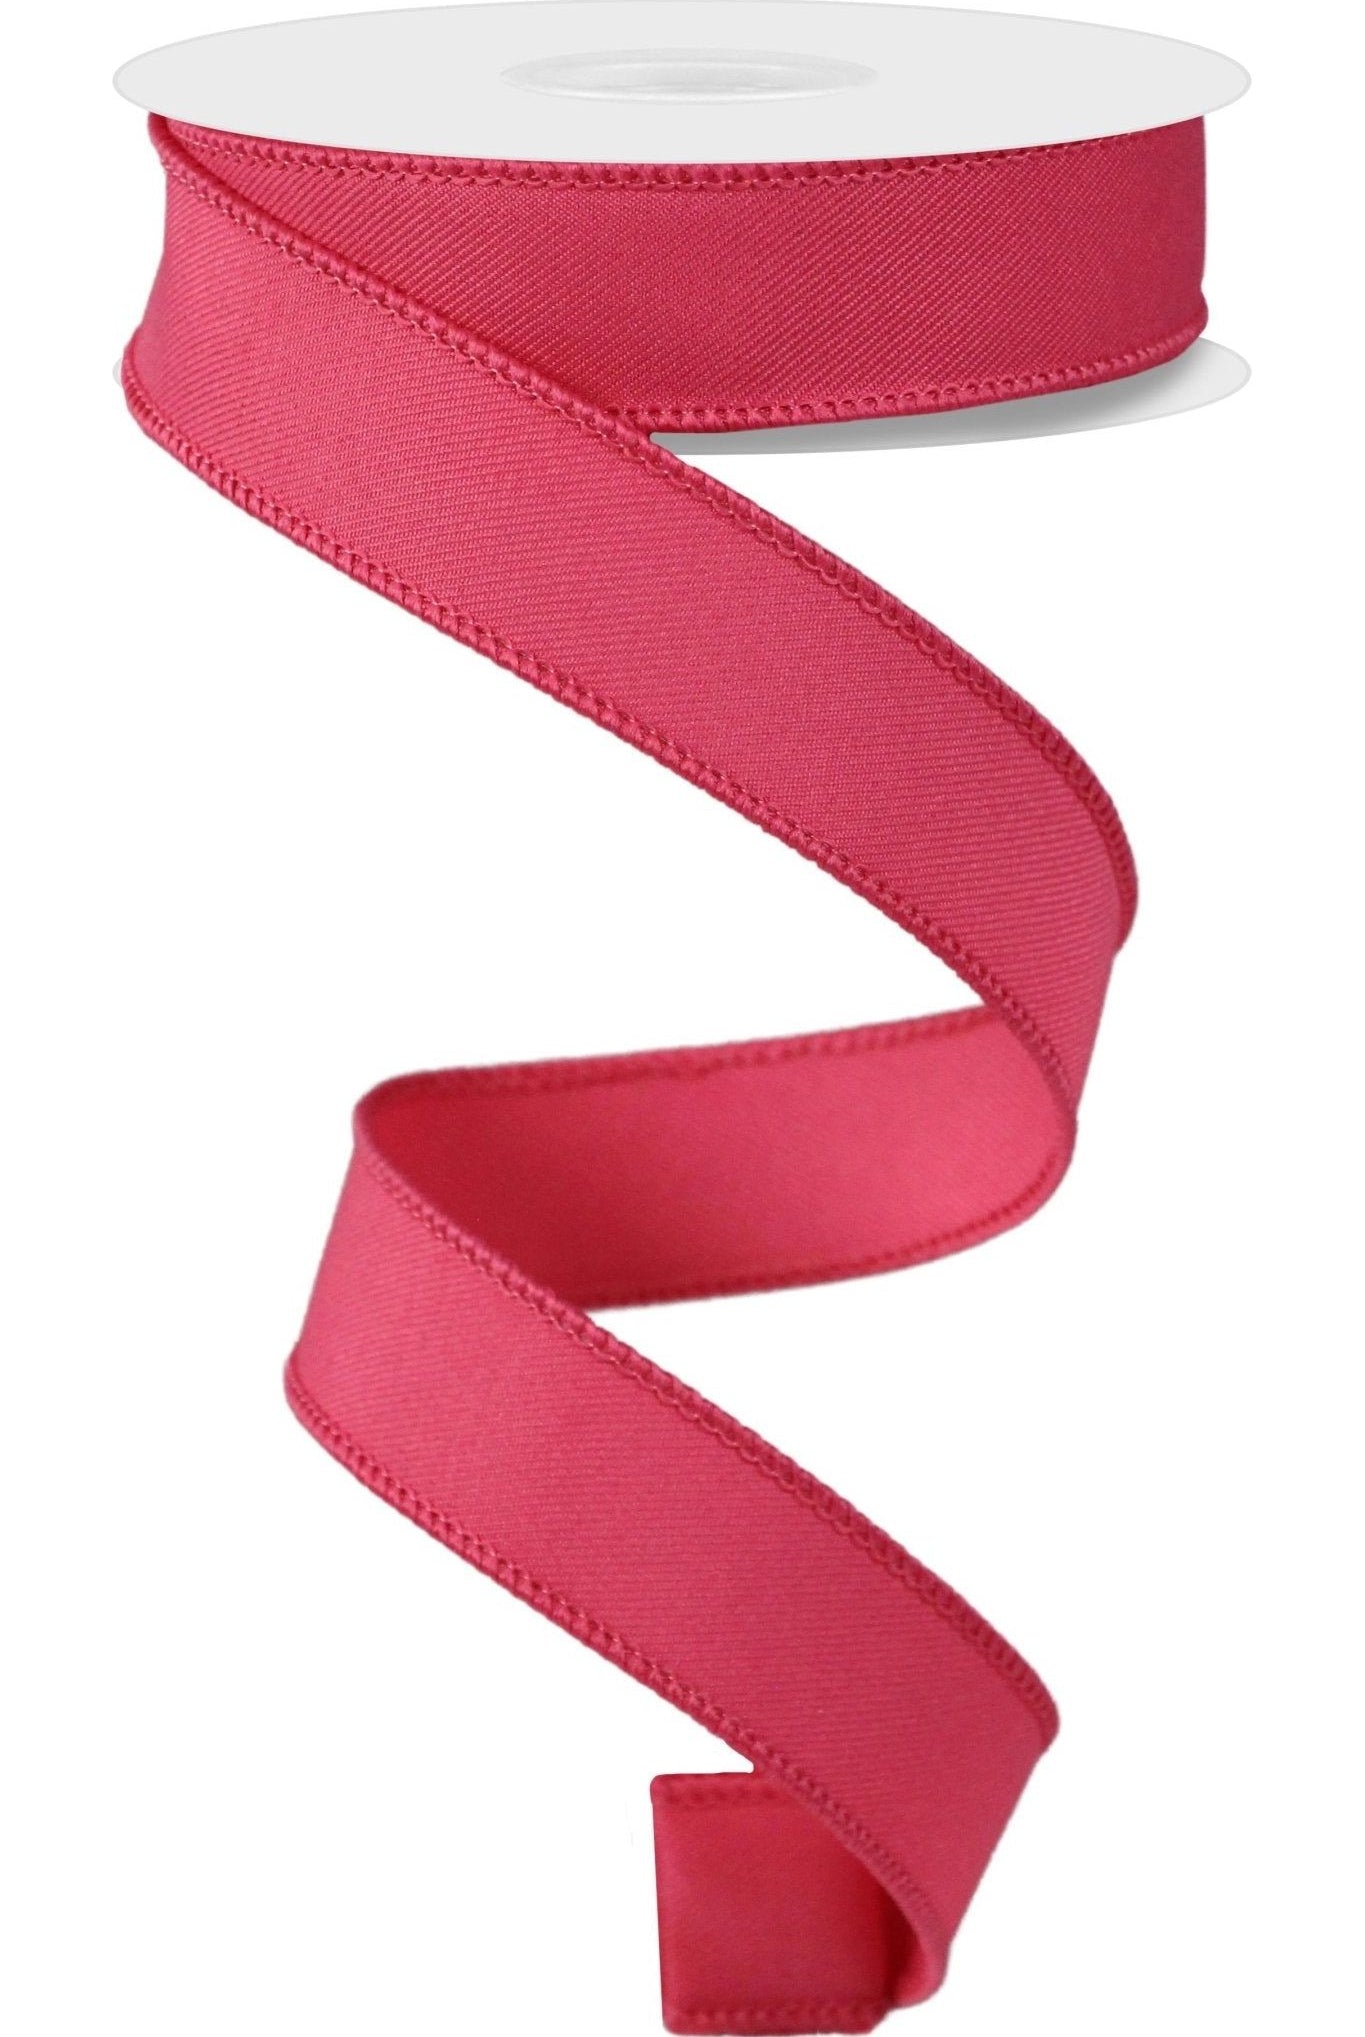 Shop For 7/8" Diagonal Weave Ribbon: Hot Pink (10 Yards) RGE720211